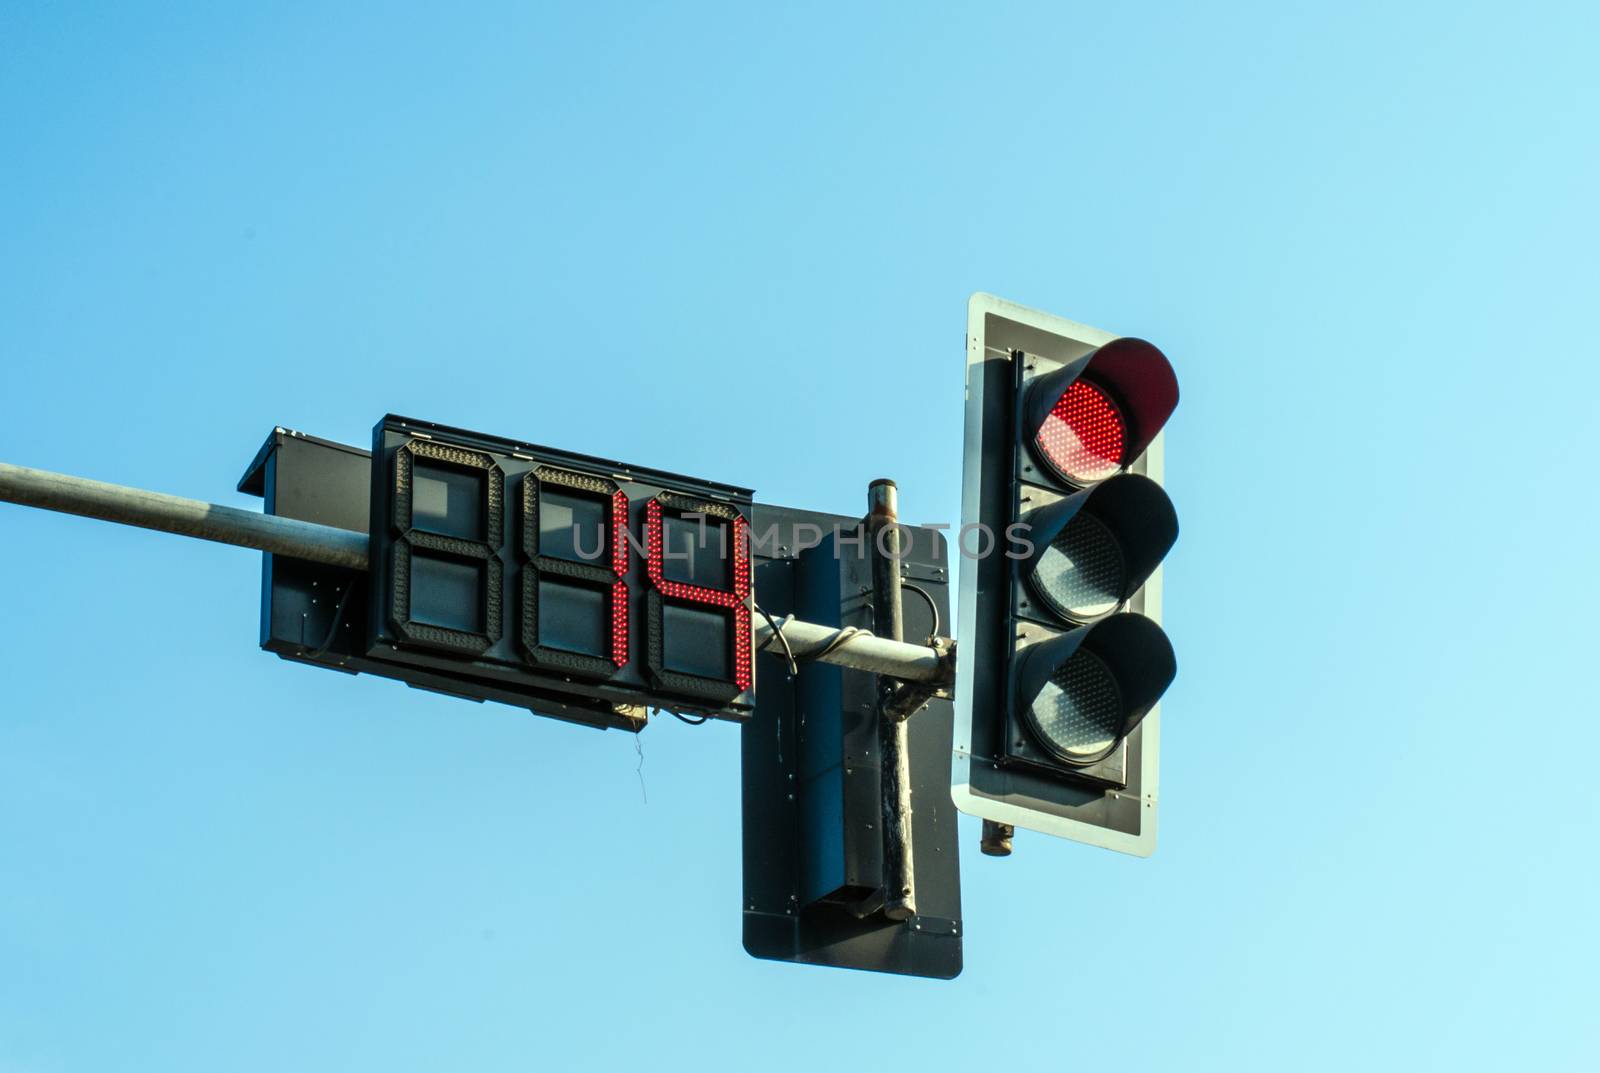 Traffic lights against sky backgrounds by photobyphotoboy